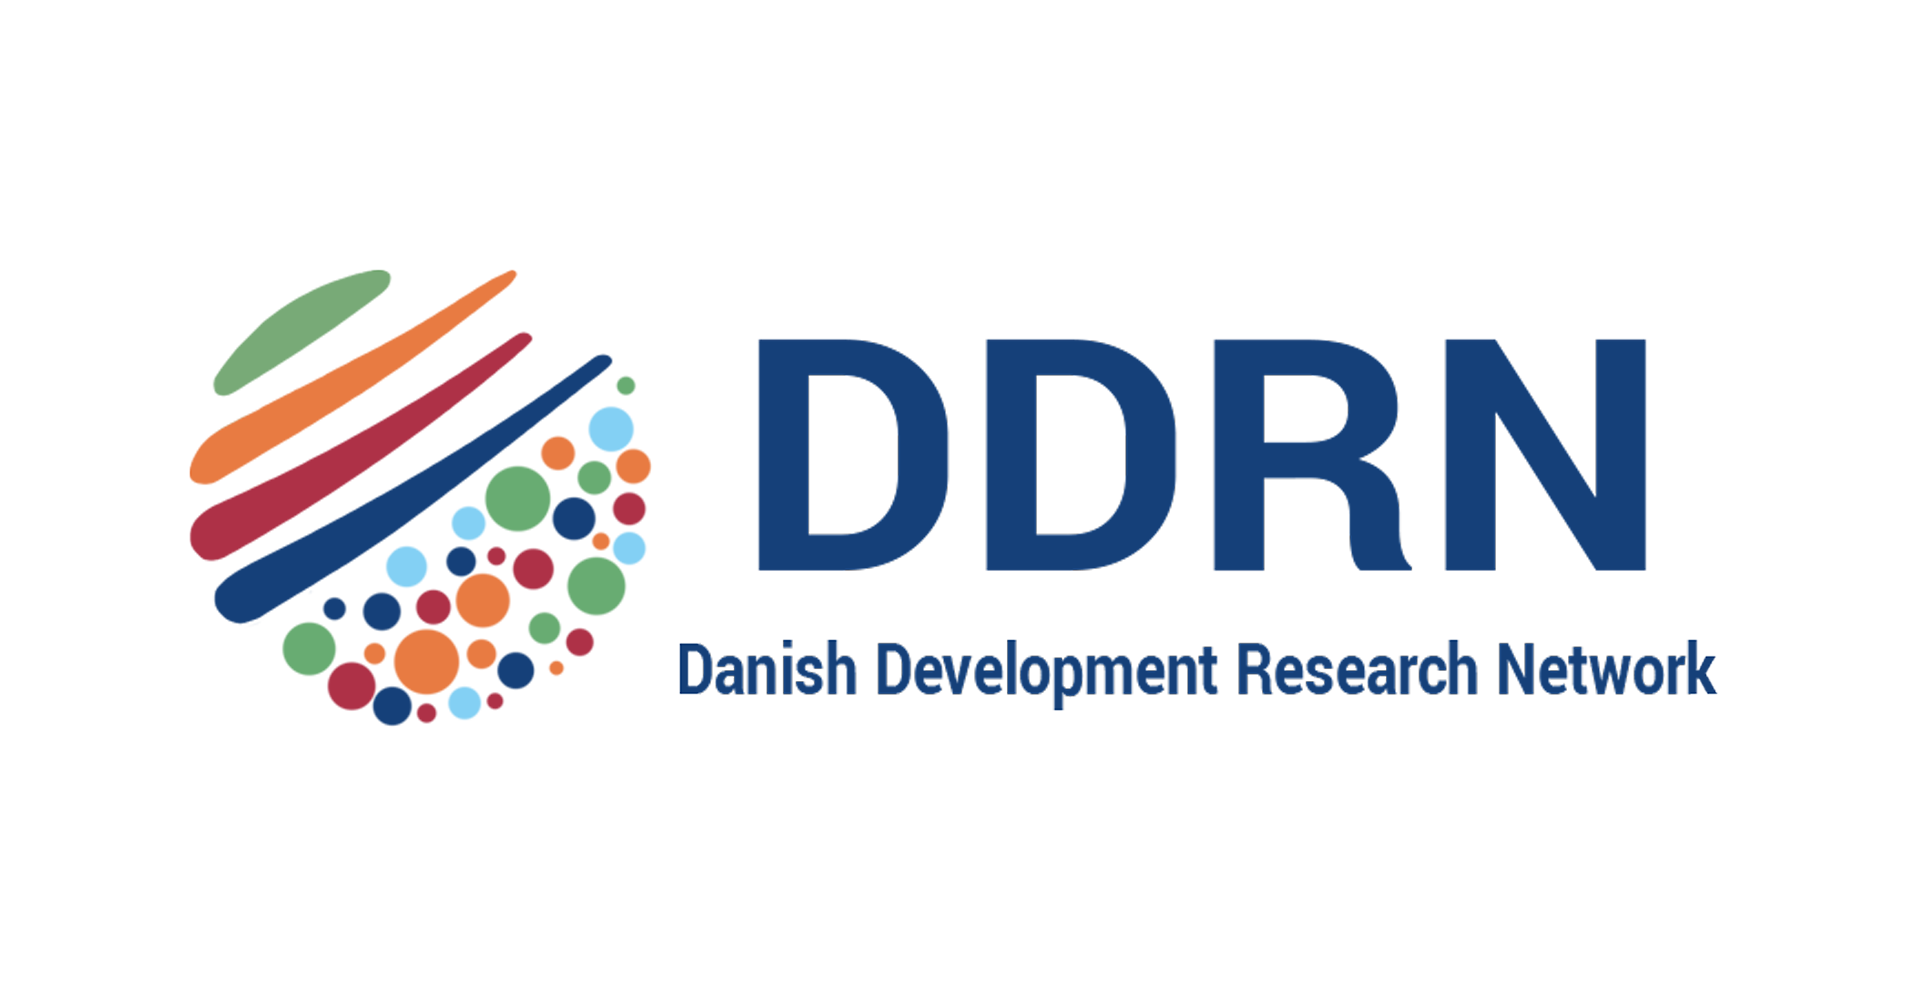 Danish Development Research Network